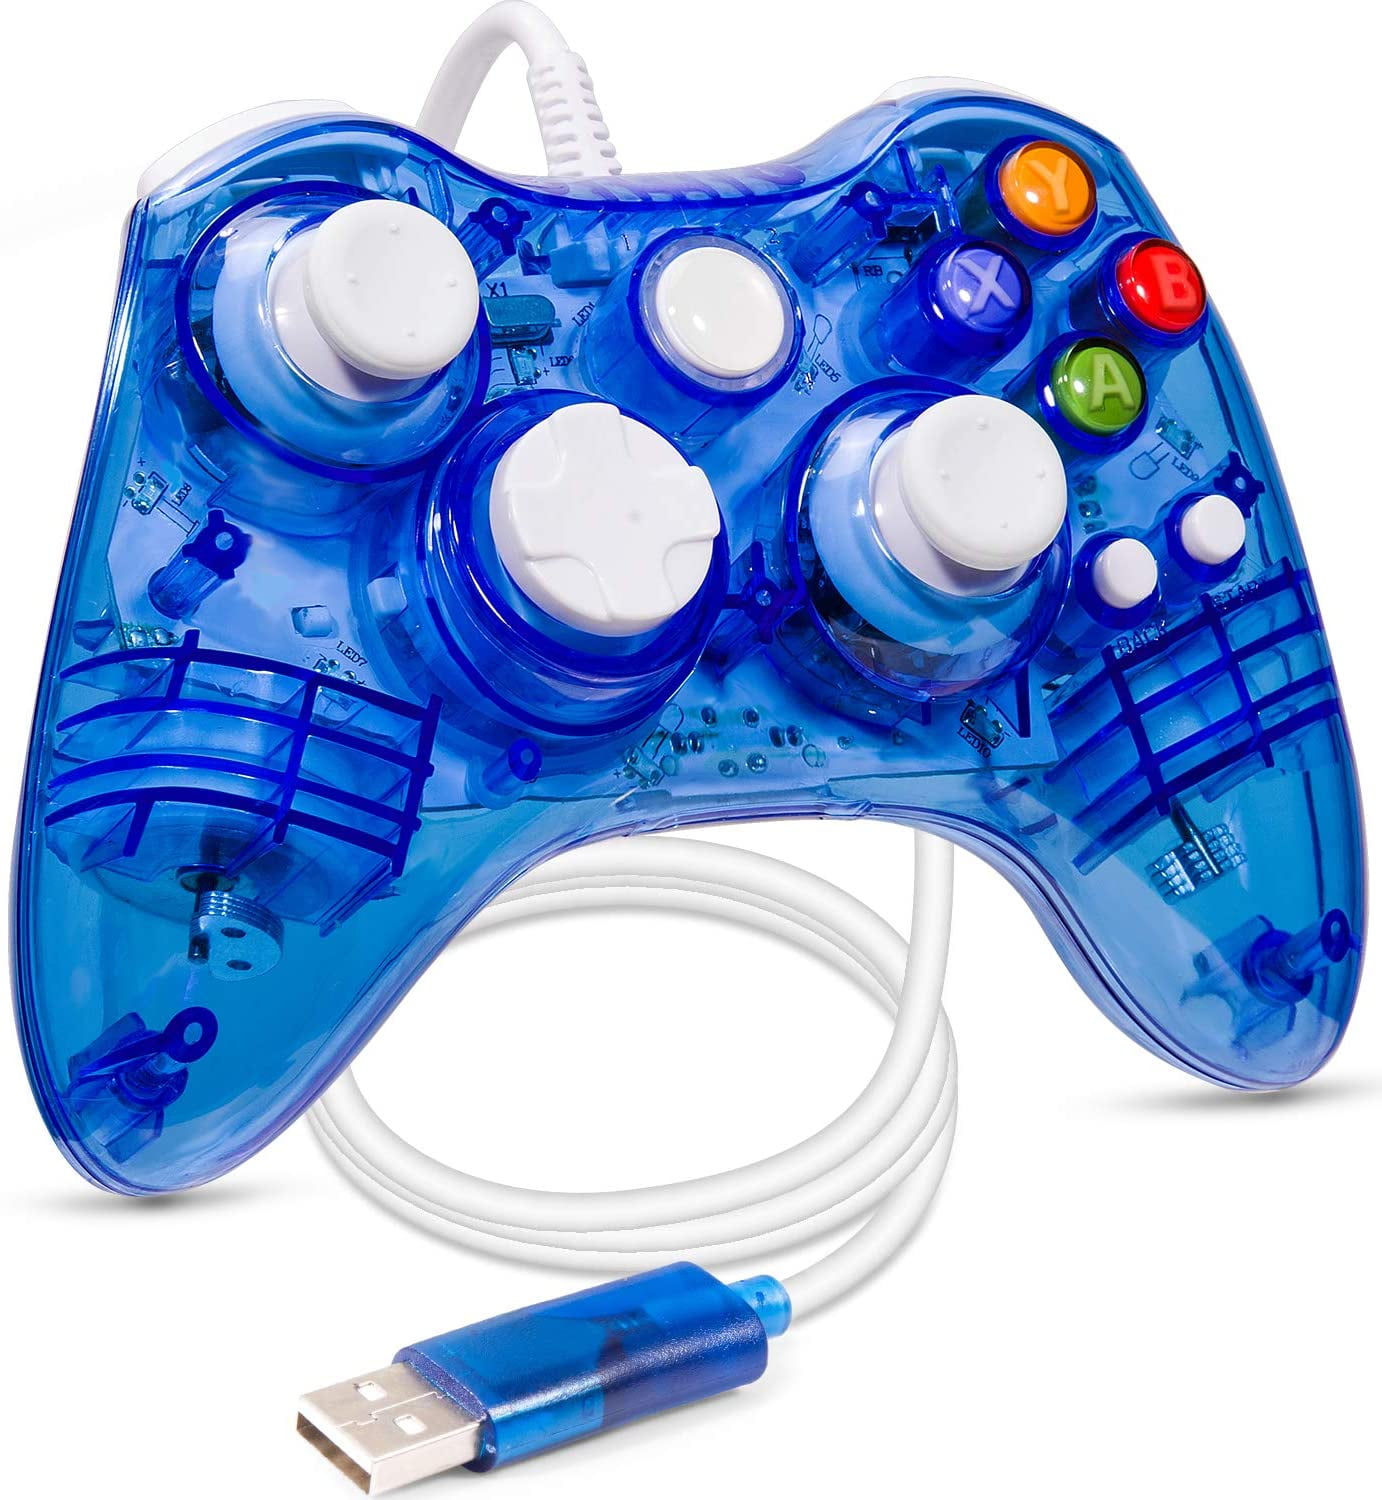 Геймпад windows 7. Джойстик Xbox 360 wired Controller (проводной) синий. Прозрачный геймпад Xbox 360. Иксбокс джойстик прозрачный. Геймпад Xbox прозрачный с подсветкой.